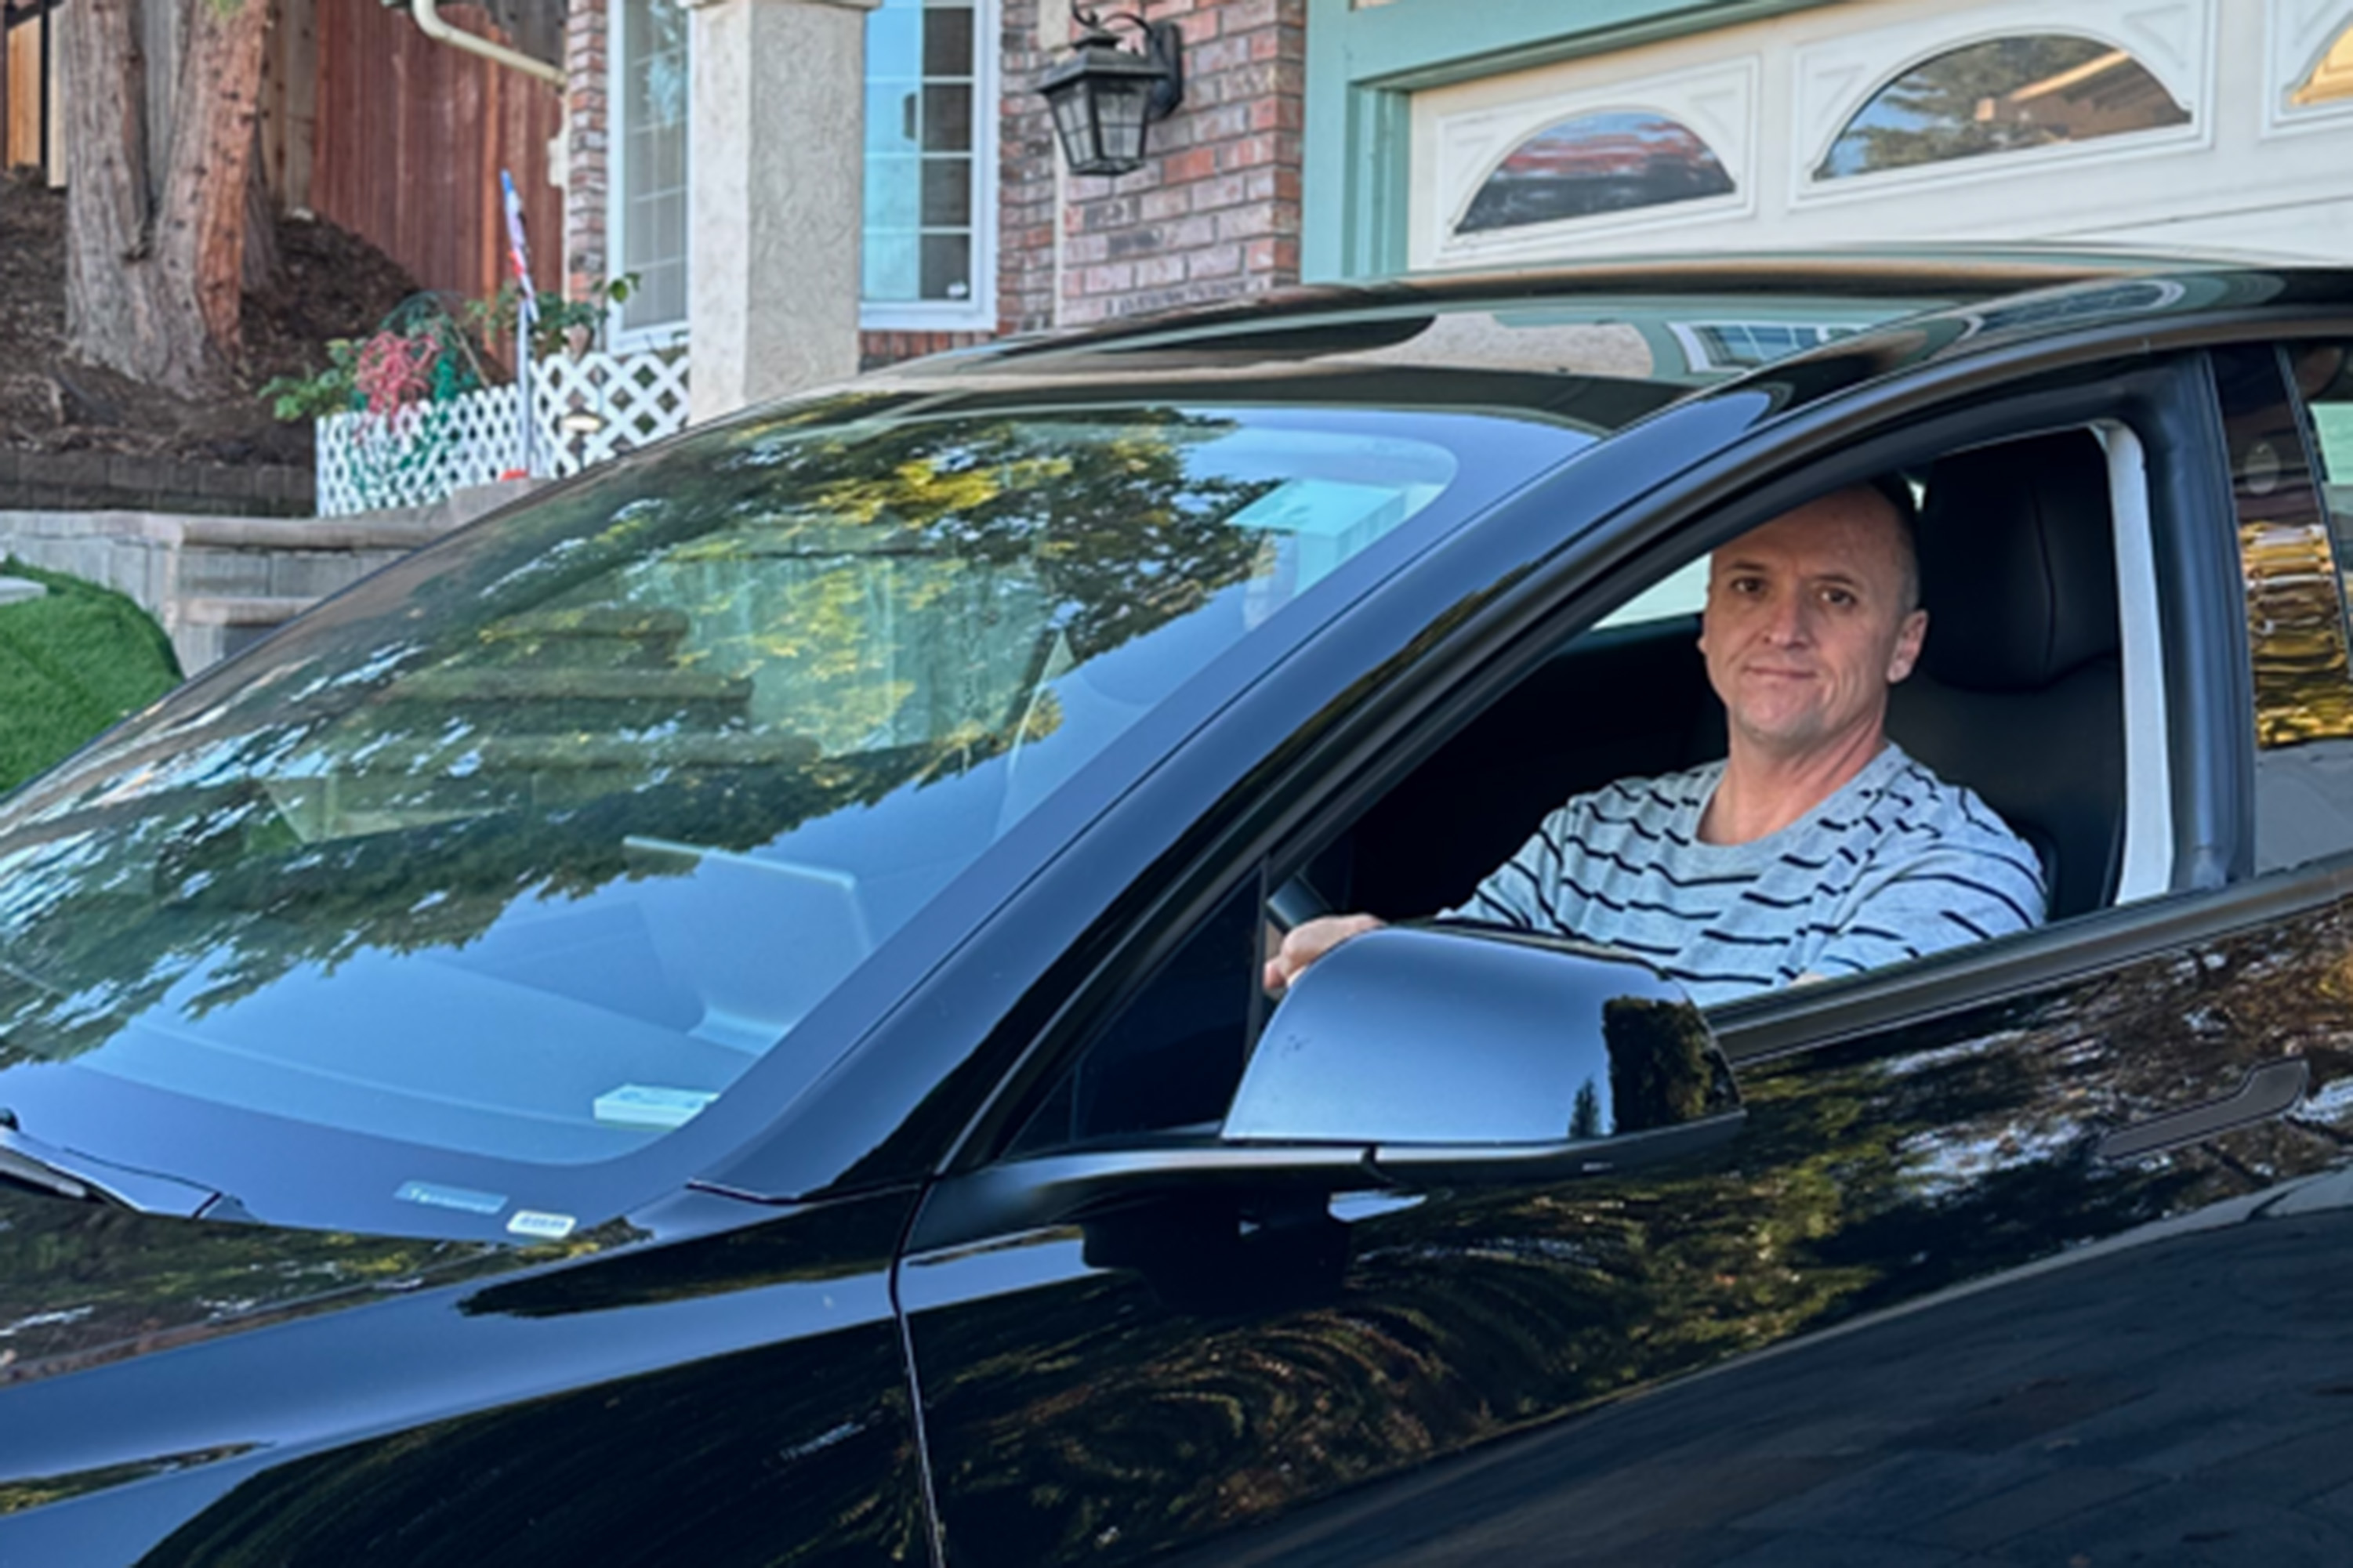 A man sits inside a black sedan parked in a driveway.